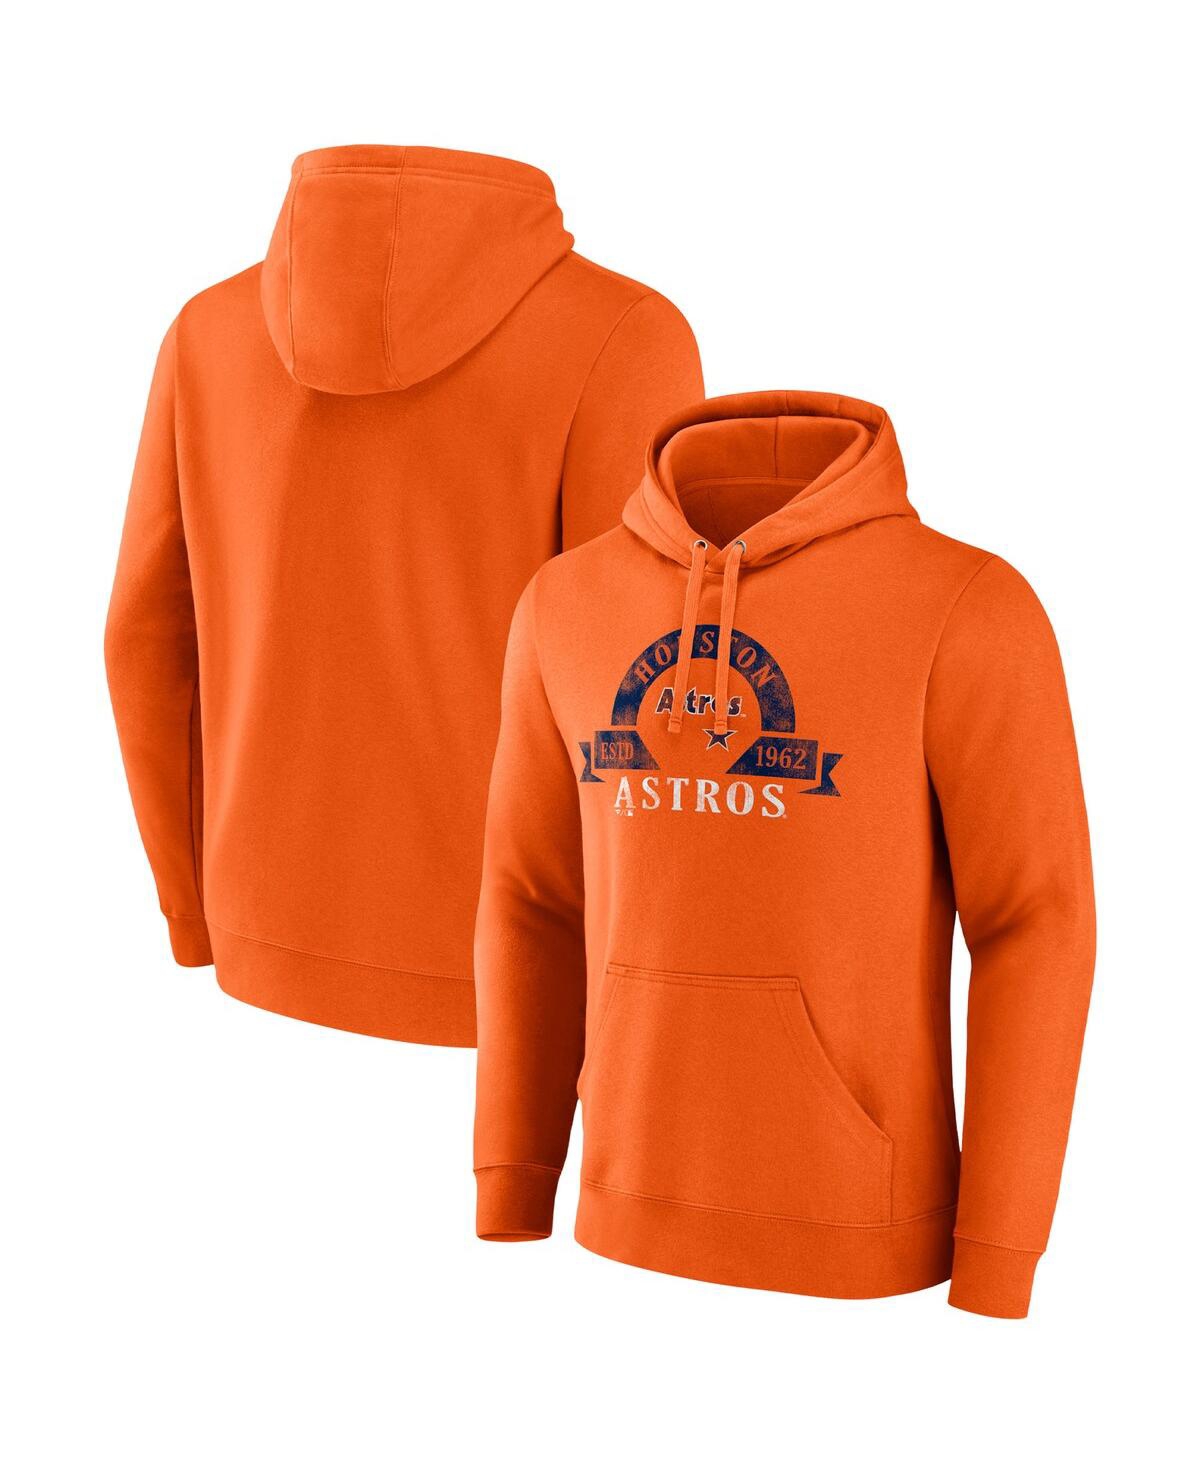 Men's Majestic Orange Houston Astros Utility Pullover Hoodie - Orange